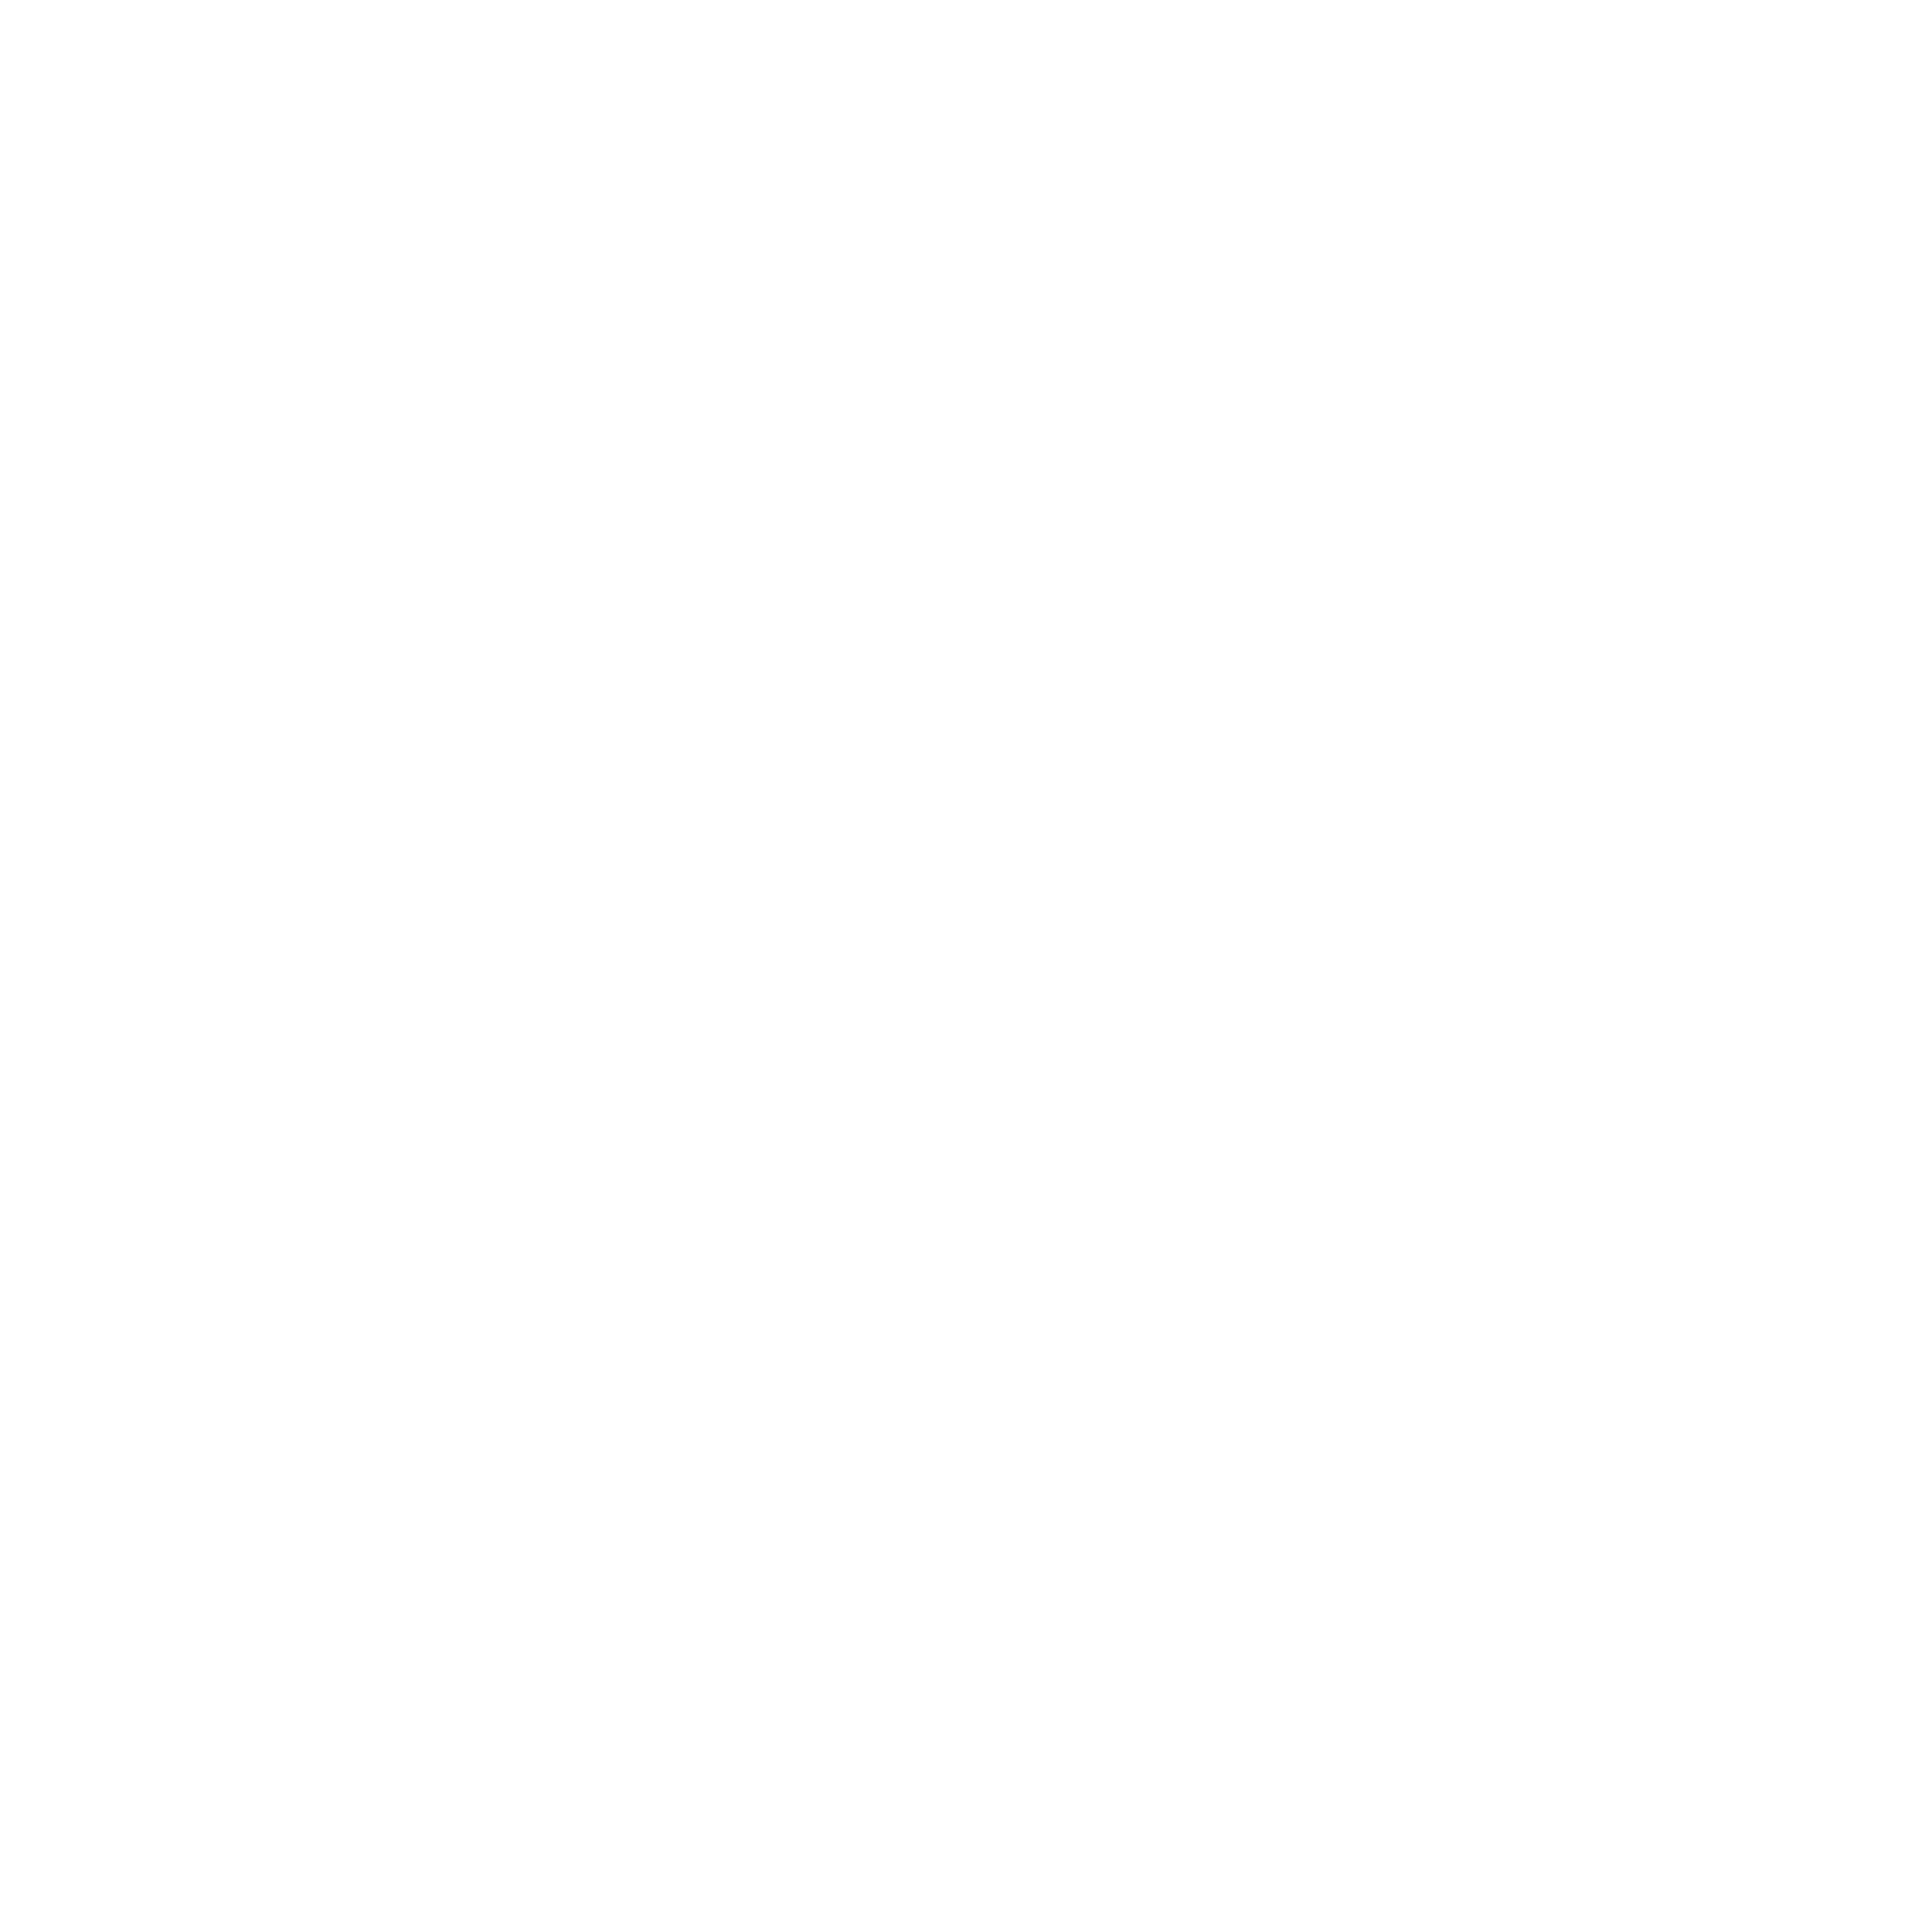 Icon representing water dispersion